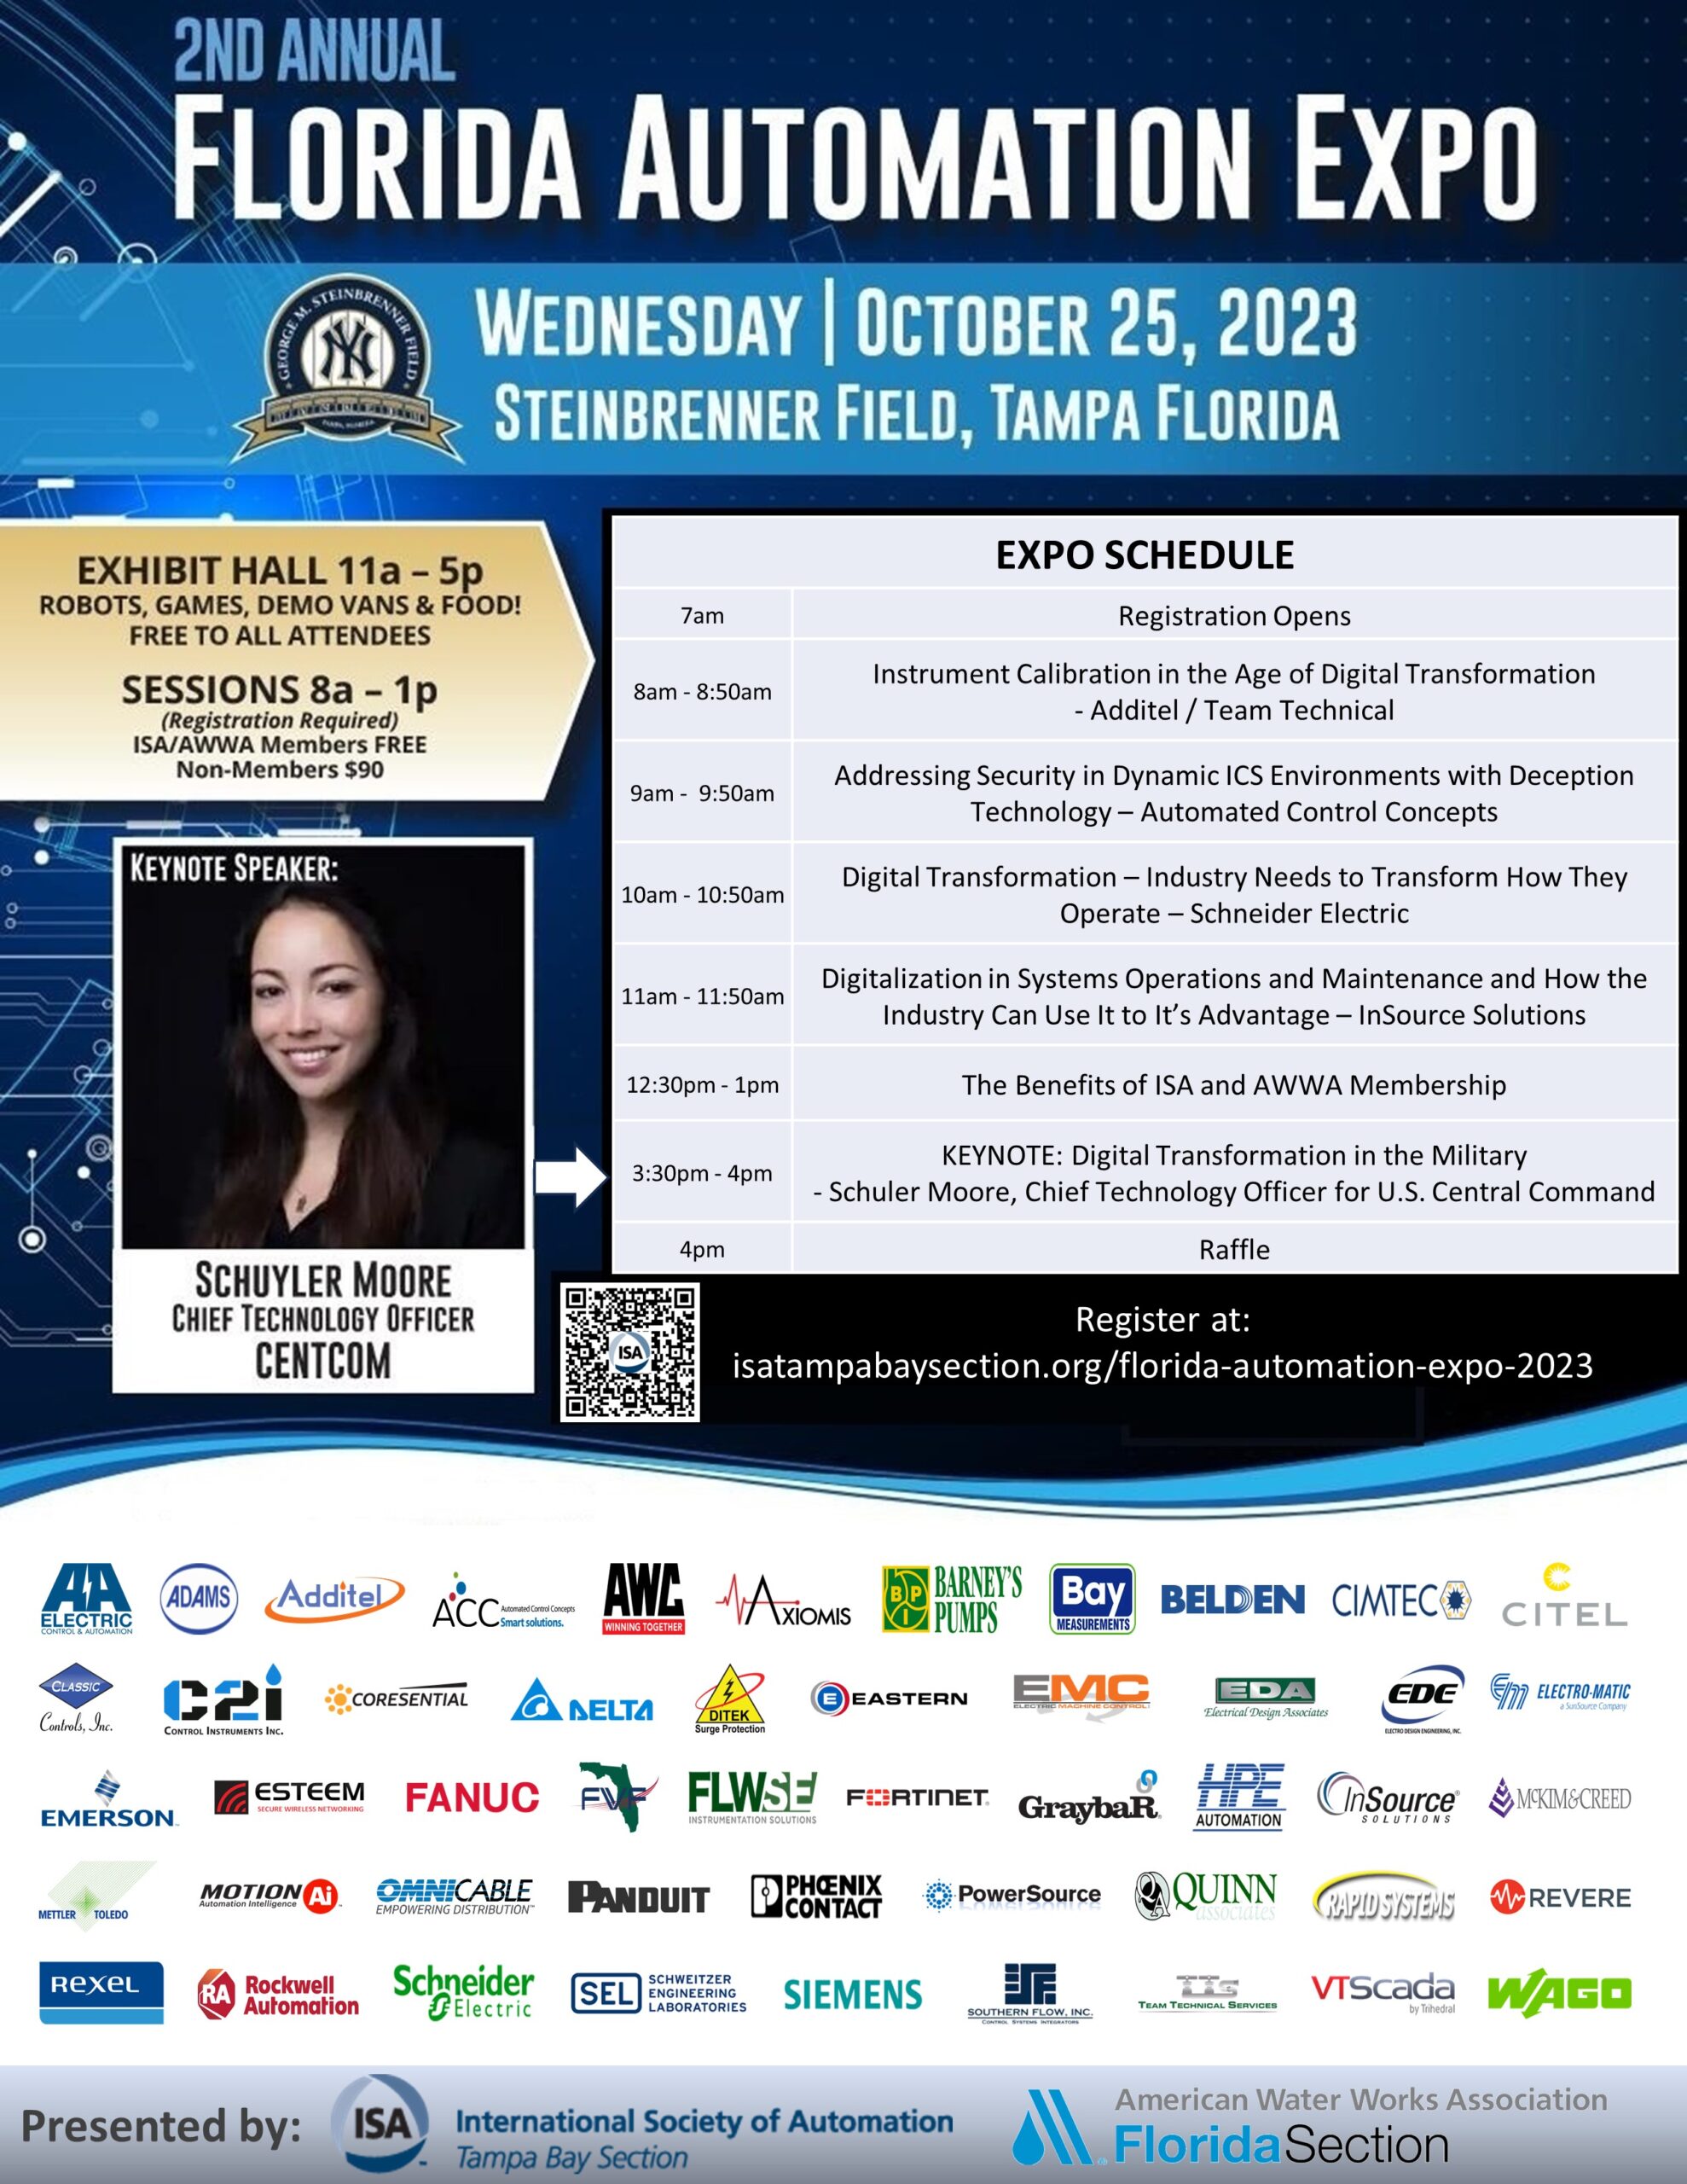 Florida Automation Expo 2023 International Society of Automation